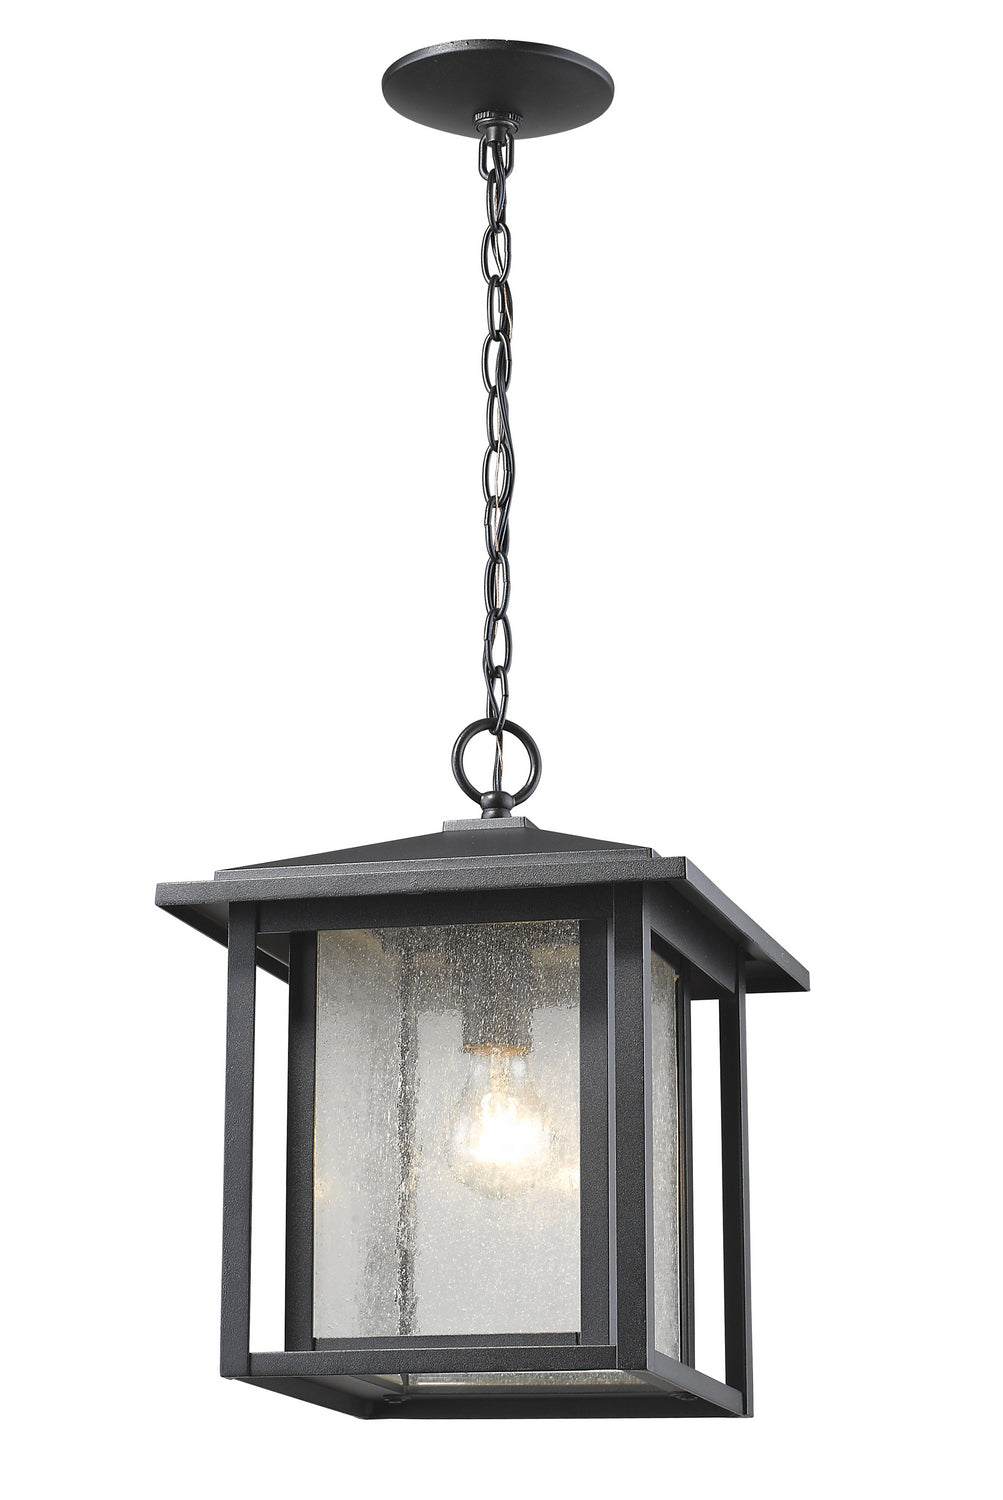 Z-Lite Canada - One Light Outdoor Chain Mount Ceiling Fixture - Aspen - Black- Union Lighting Luminaires Decor